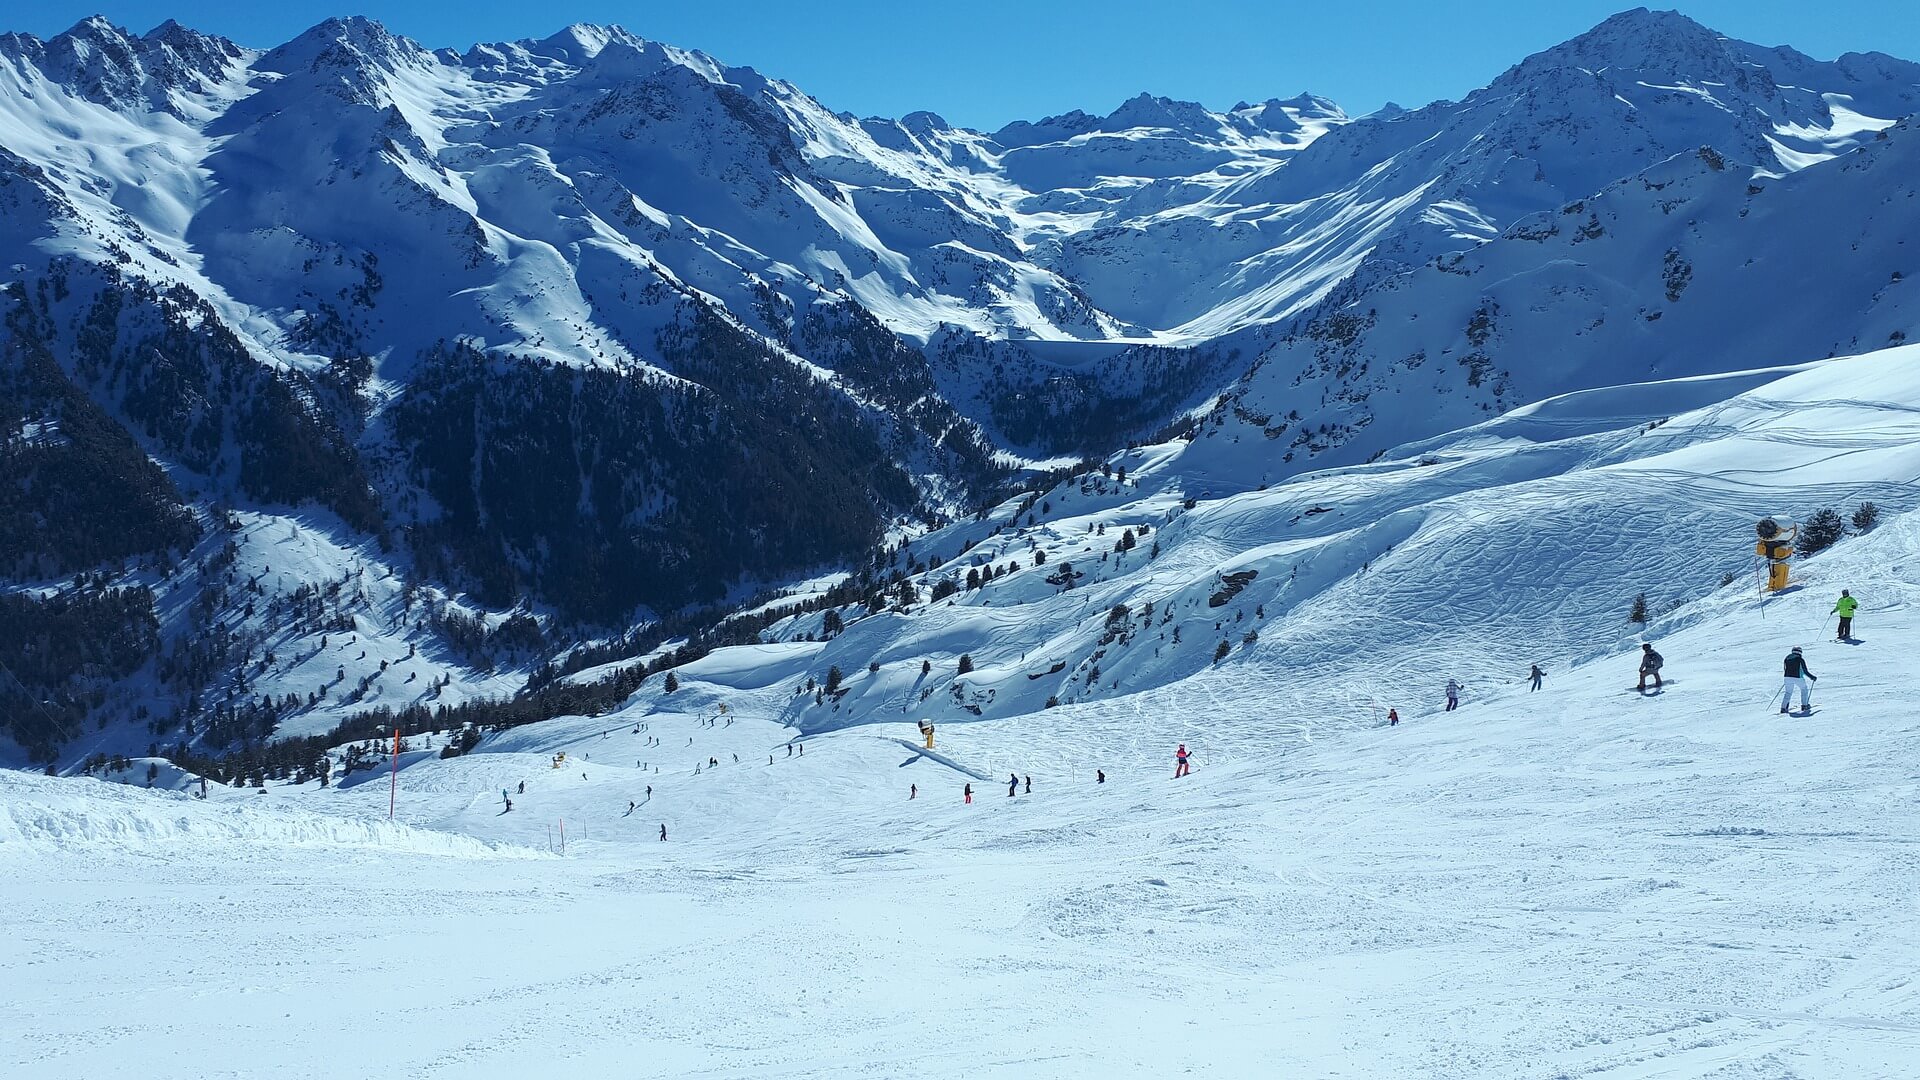 People skiing on the mountain